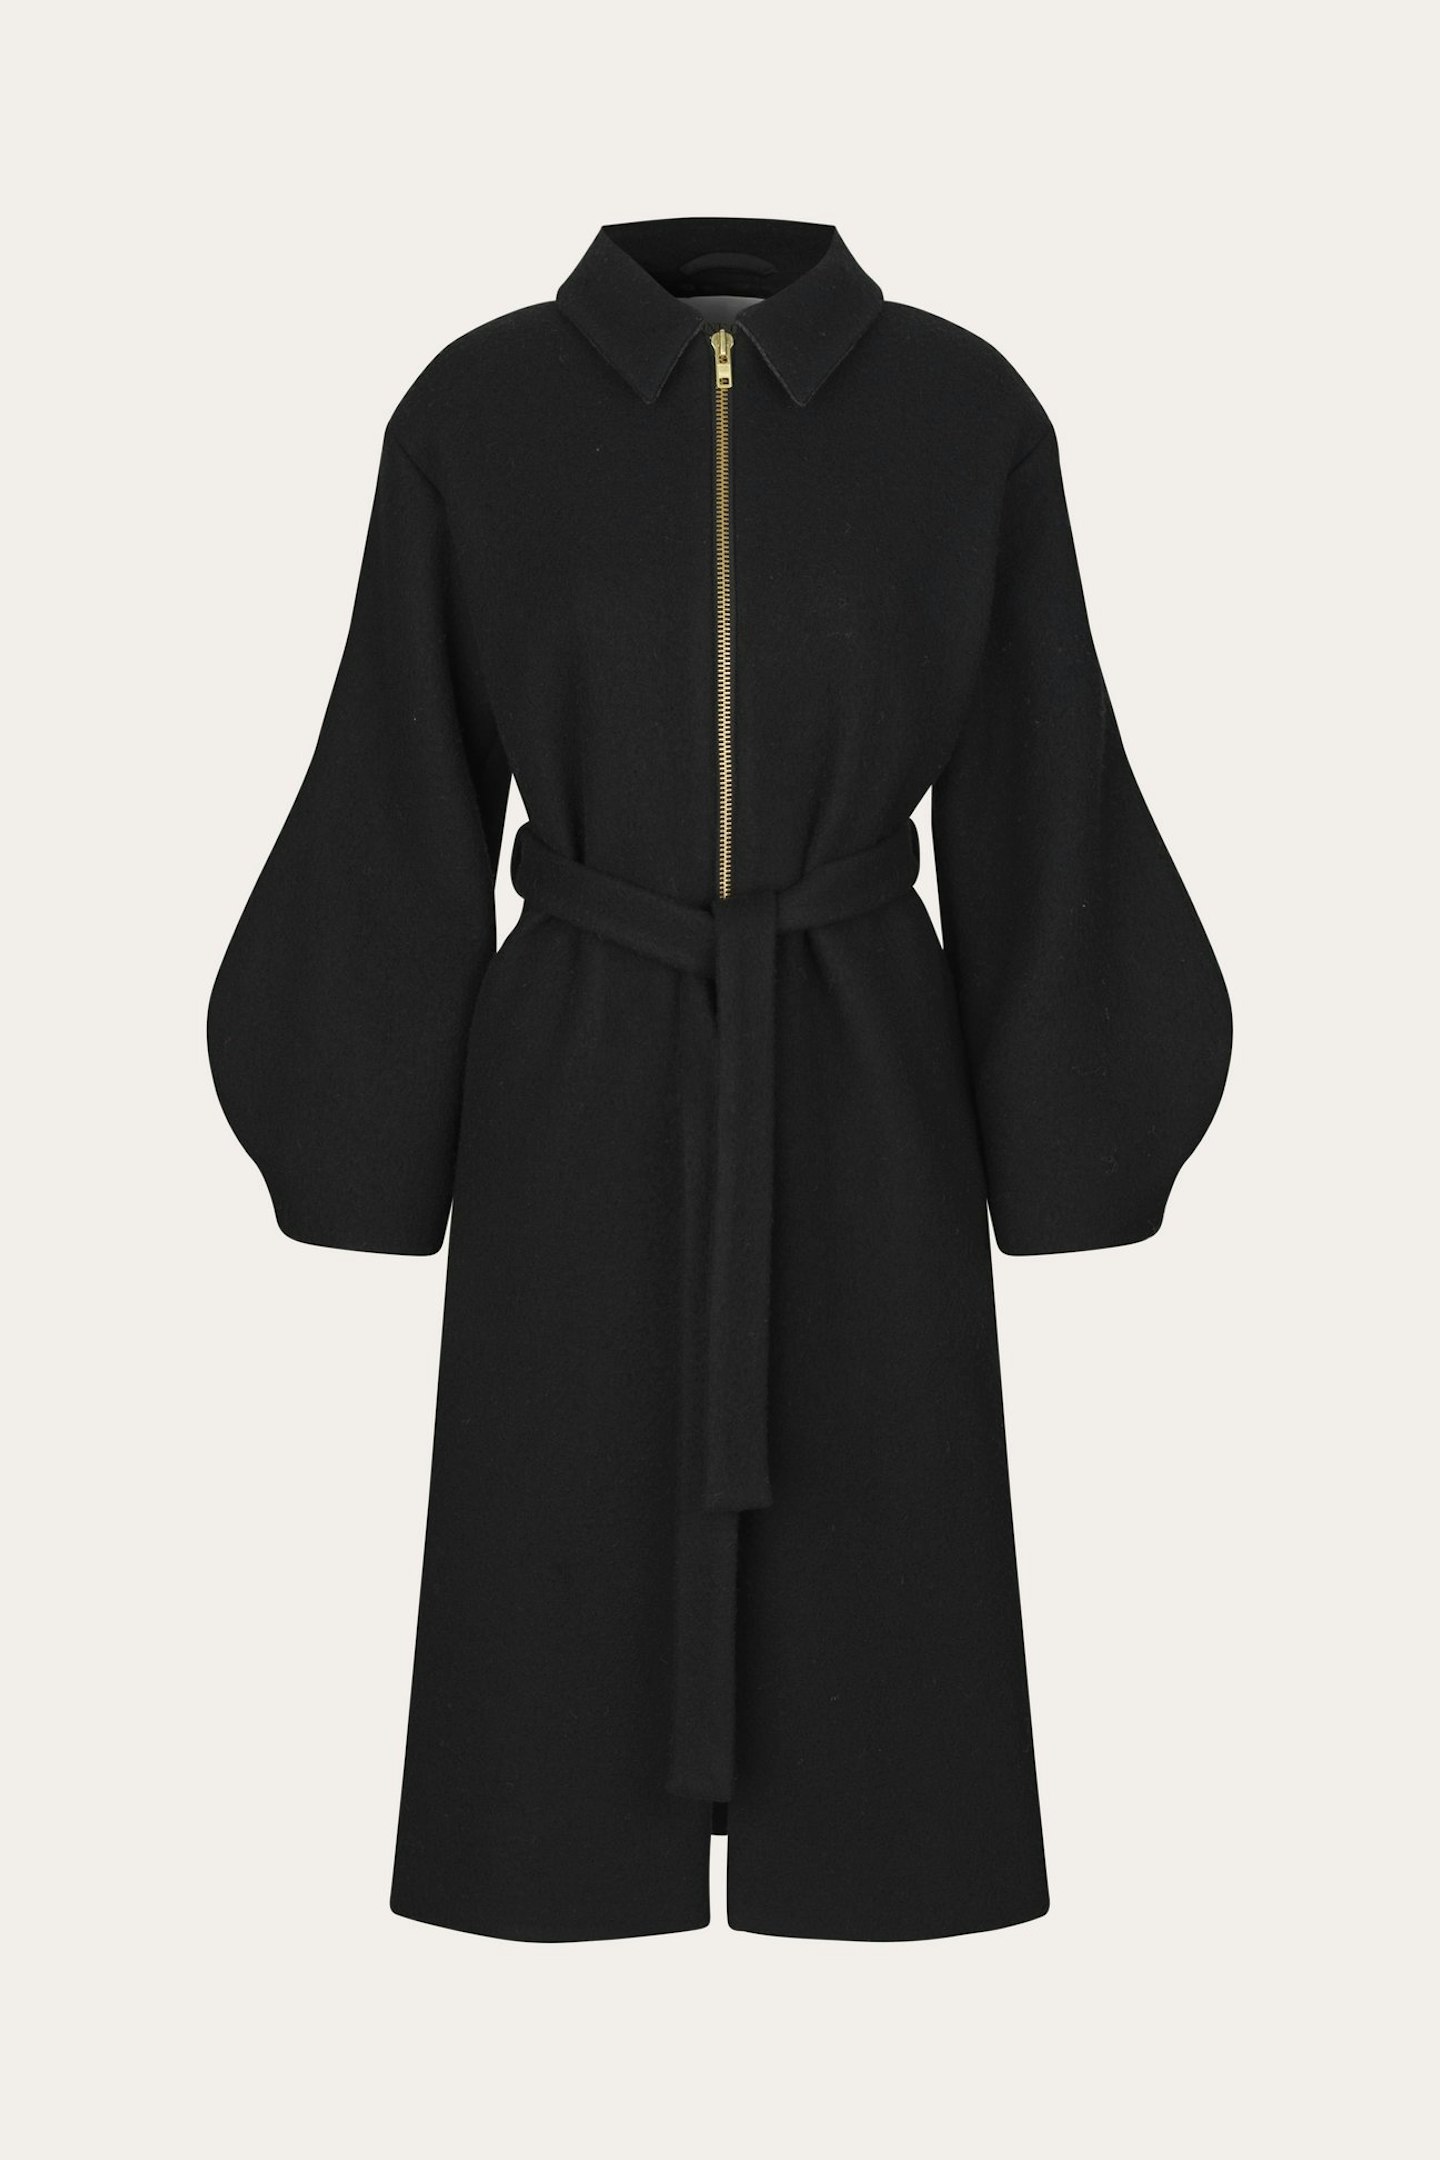 Stine Goya, Wilma Coat, £490